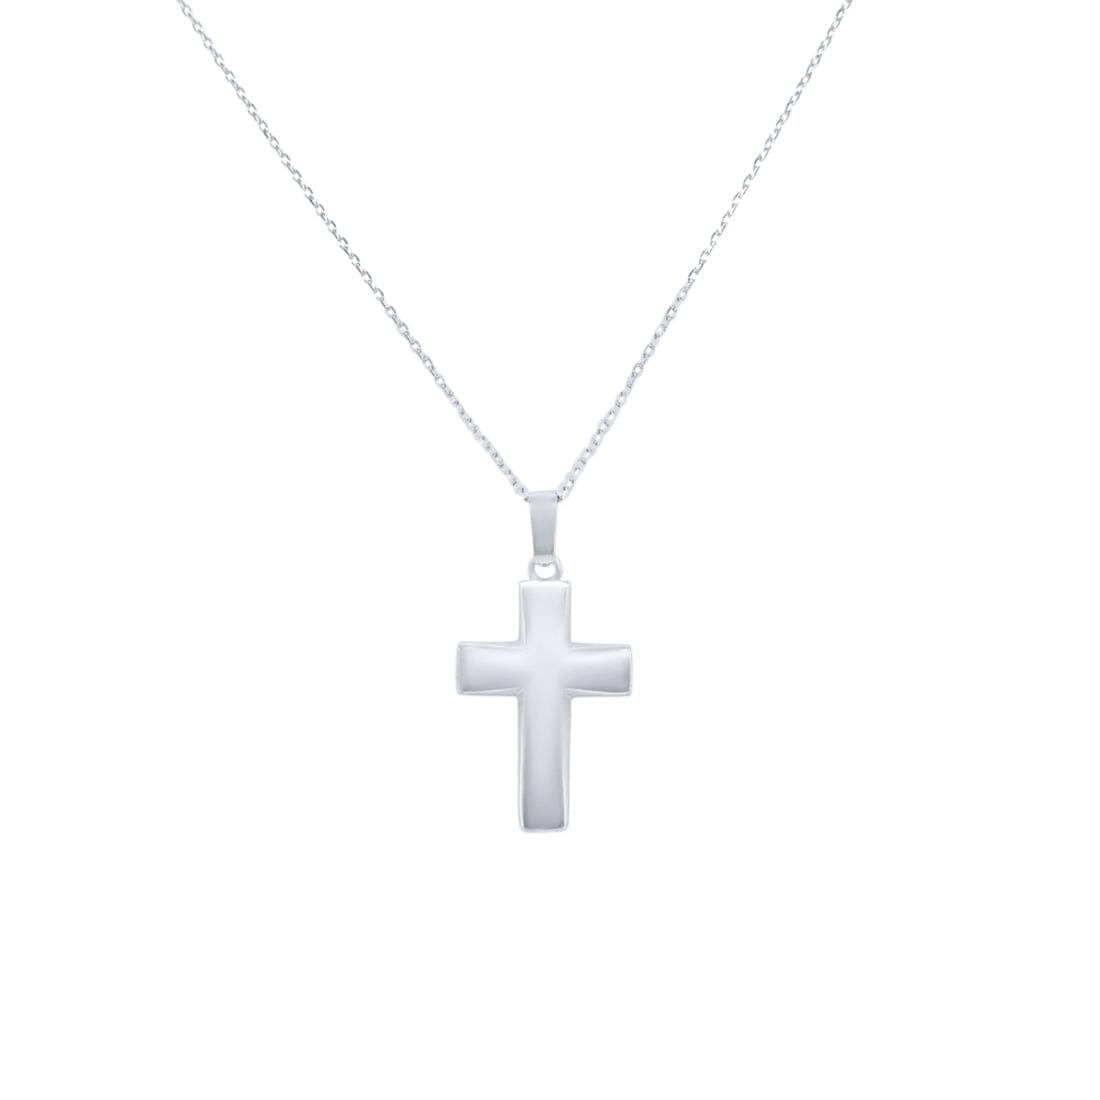 45cm Plain Cross Necklace in Sterling Silver Necklaces Bevilles 